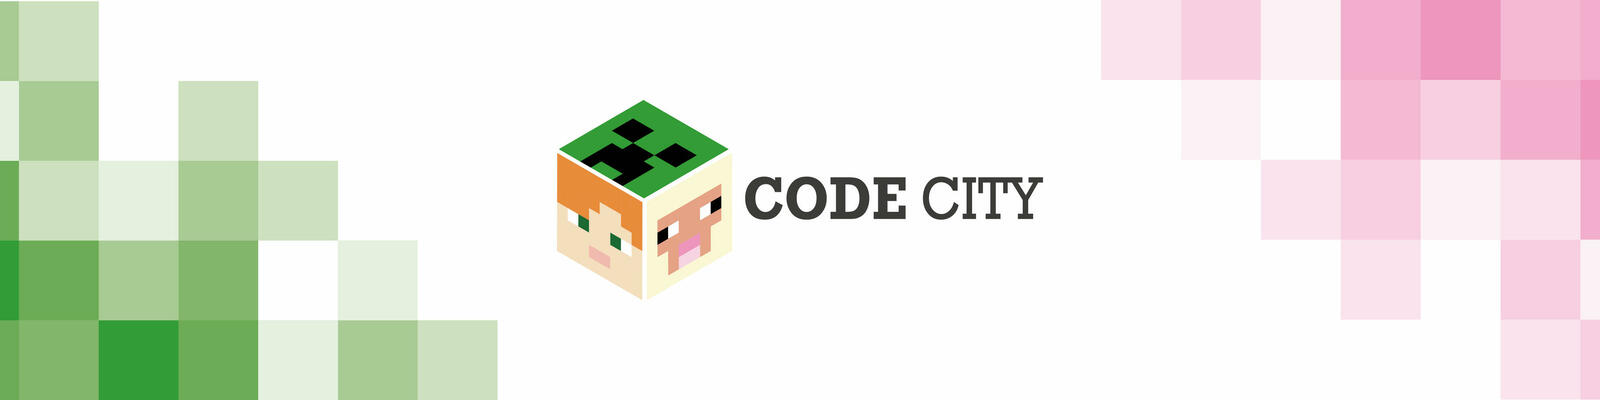 Code City banner